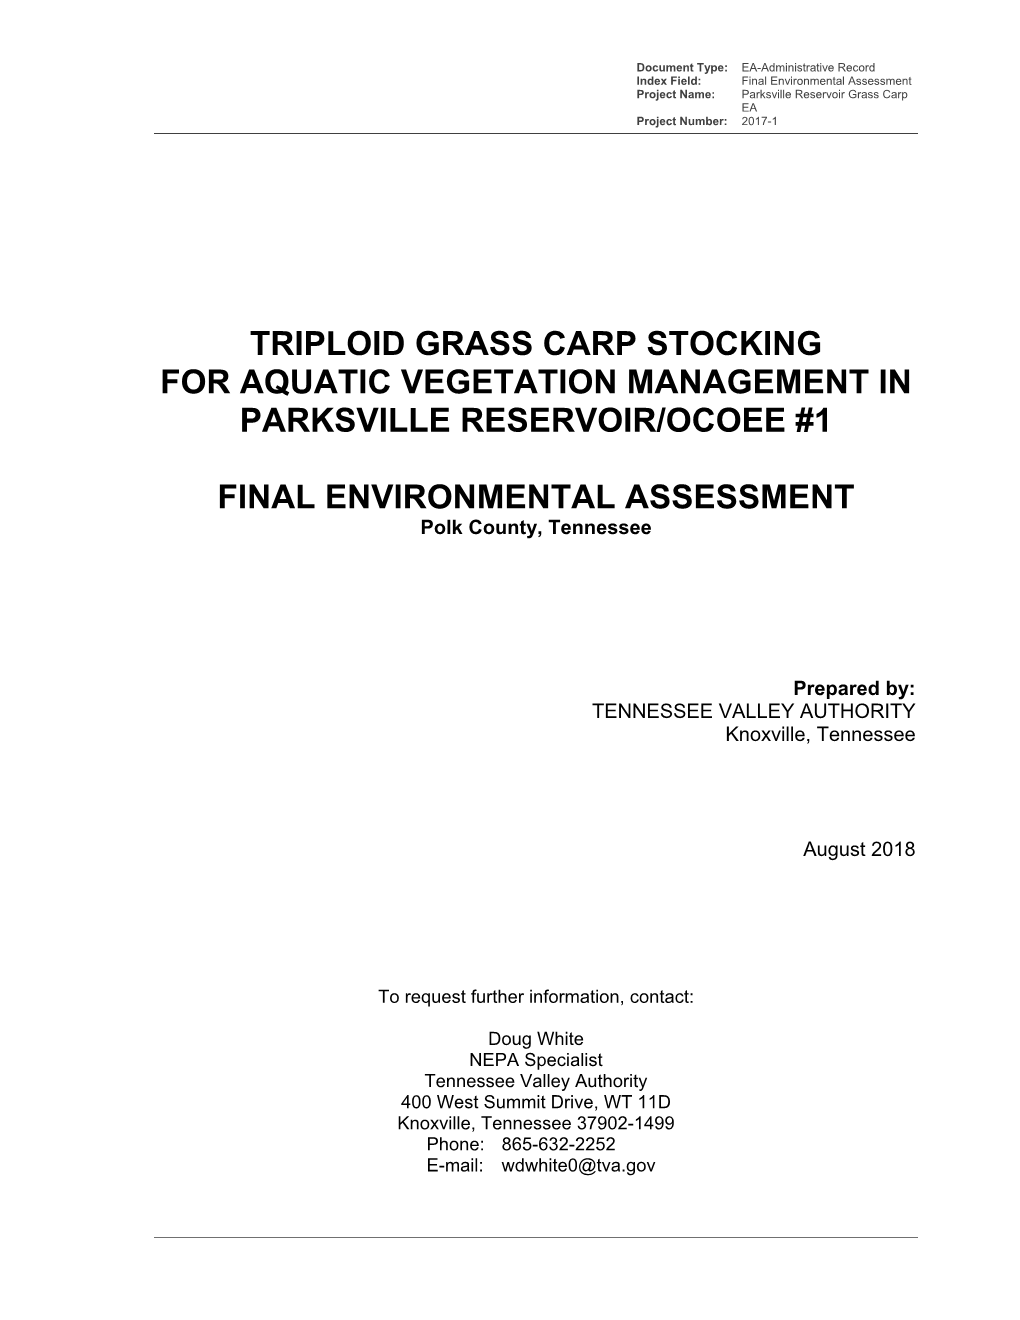 Triploid Grass Carp Stocking for Aquatic Vegetation Management in Parksville Reservoir/Ocoee #1